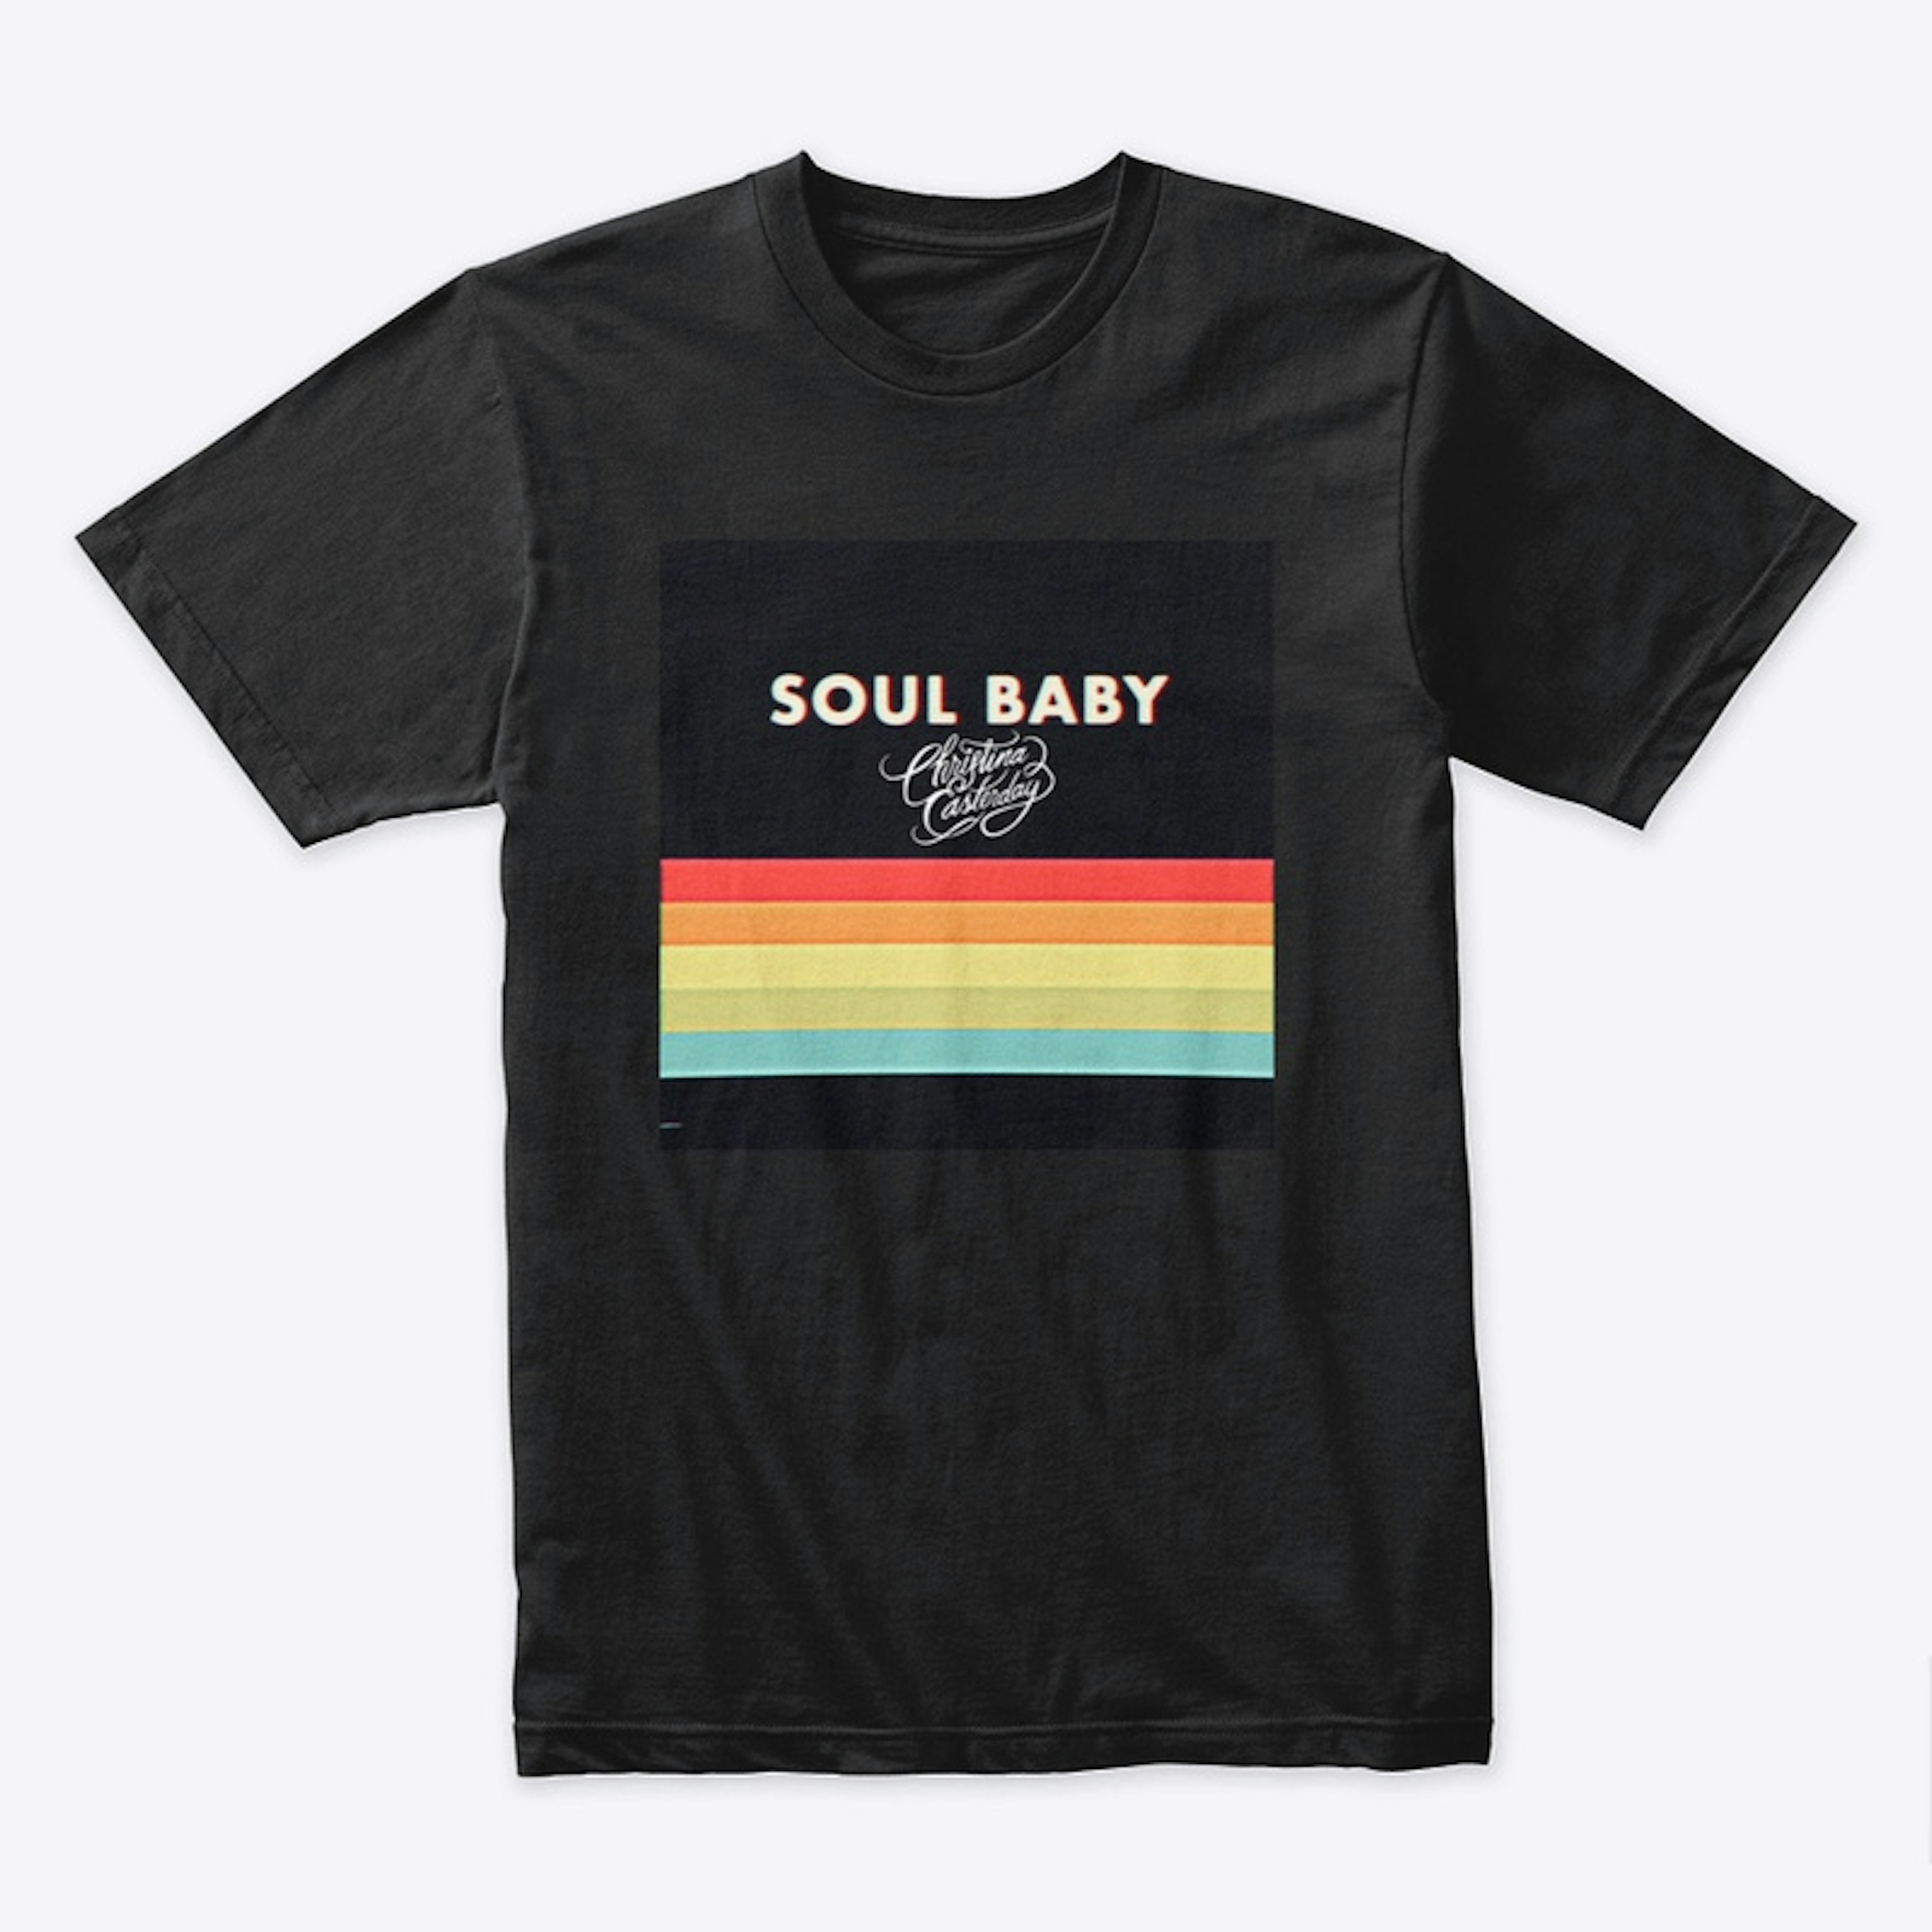 Soul Baby Album Cover Tee